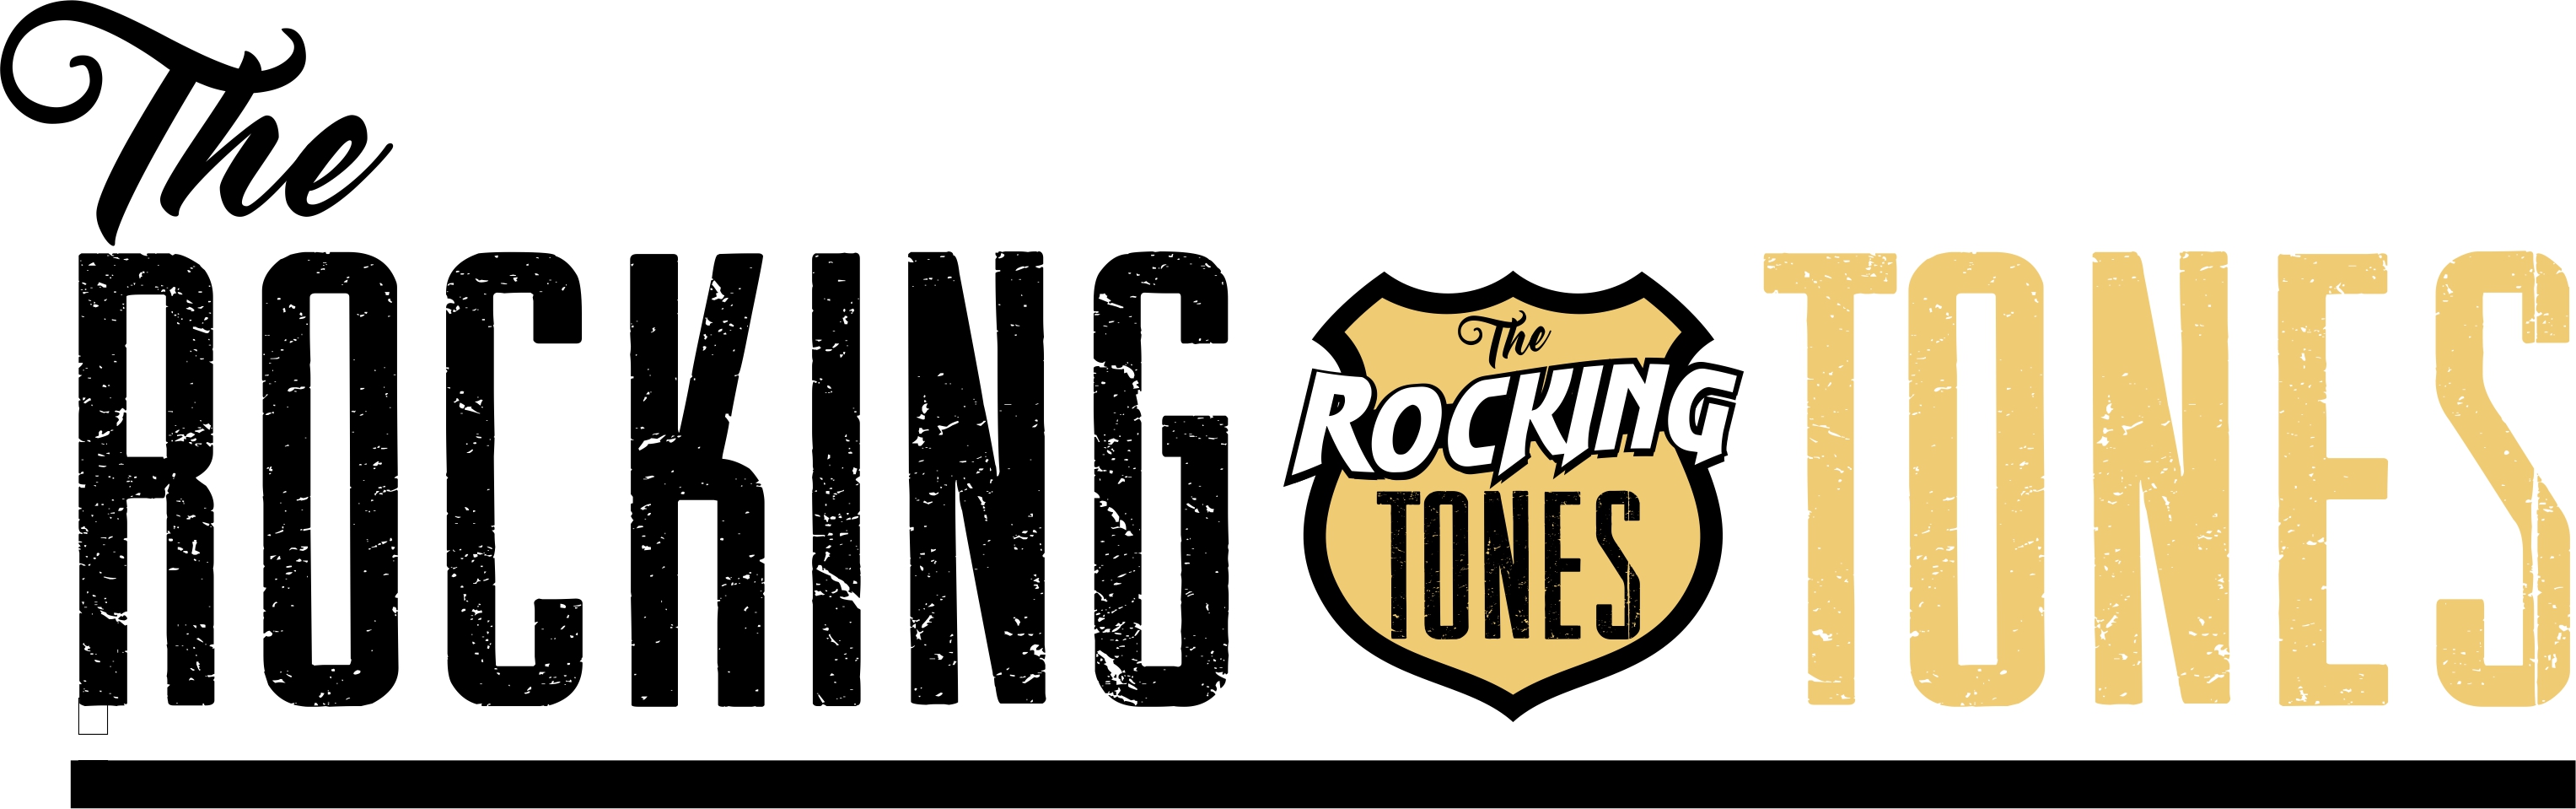 The Rocking Tones